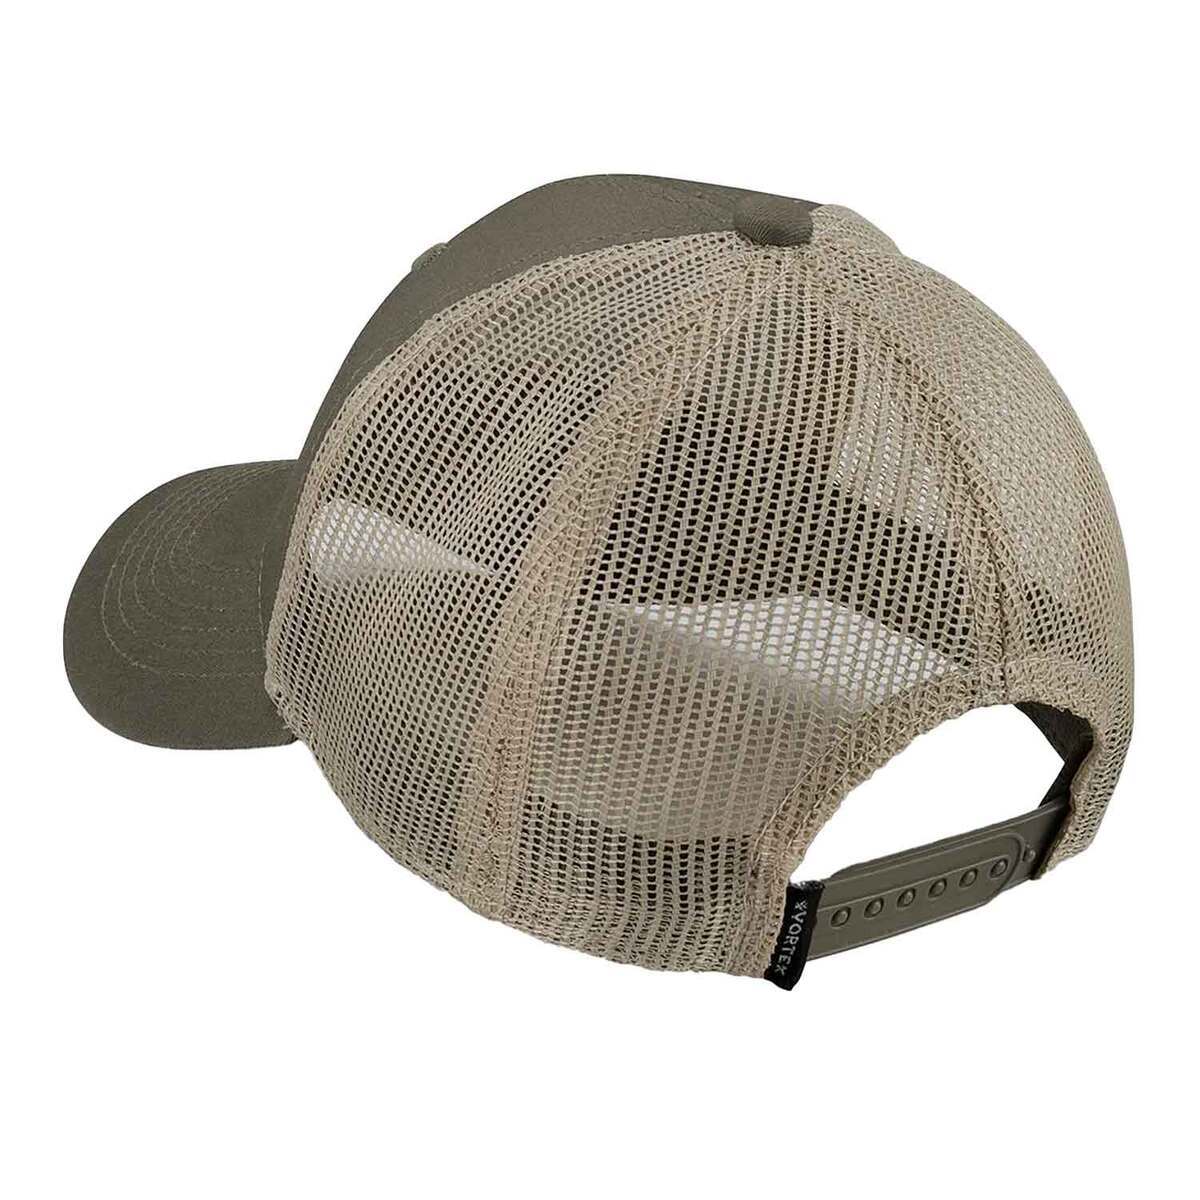 Vortex Men's Full Tine Adjustable Hat - Moss - One Size Fits Most ...